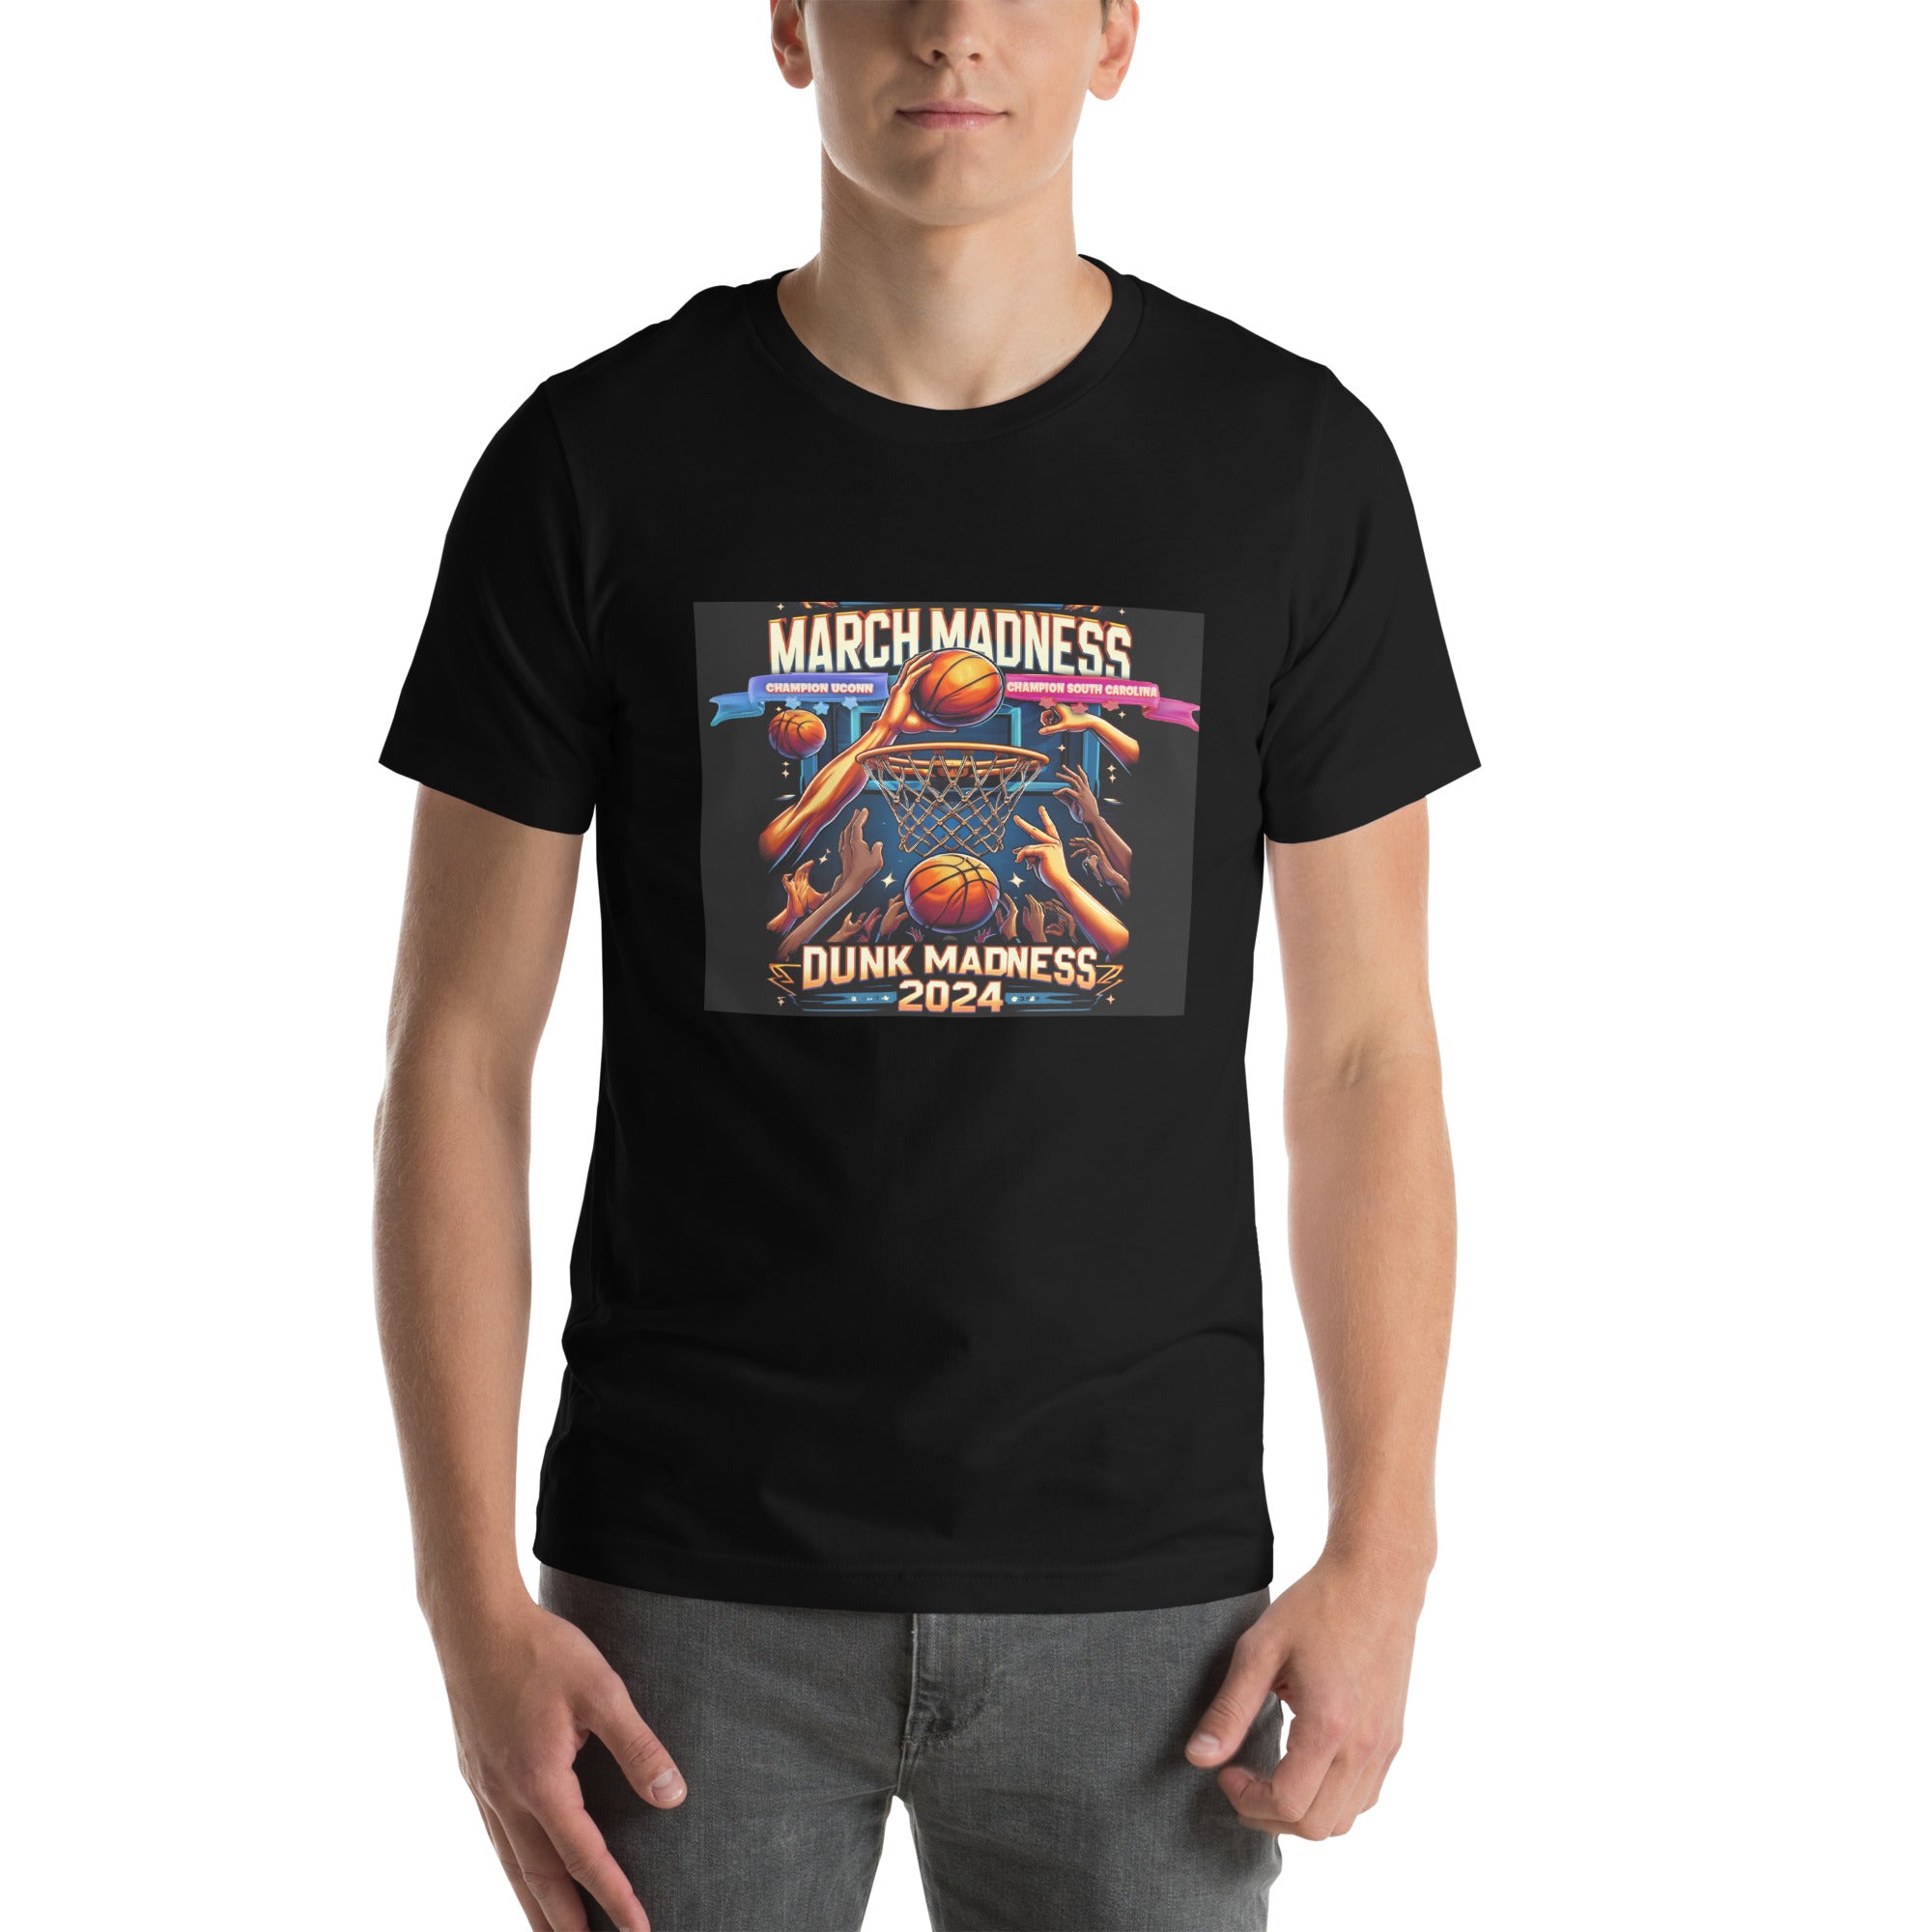 Merch Madness Dunk Madness 2024 Unisex t-shirt